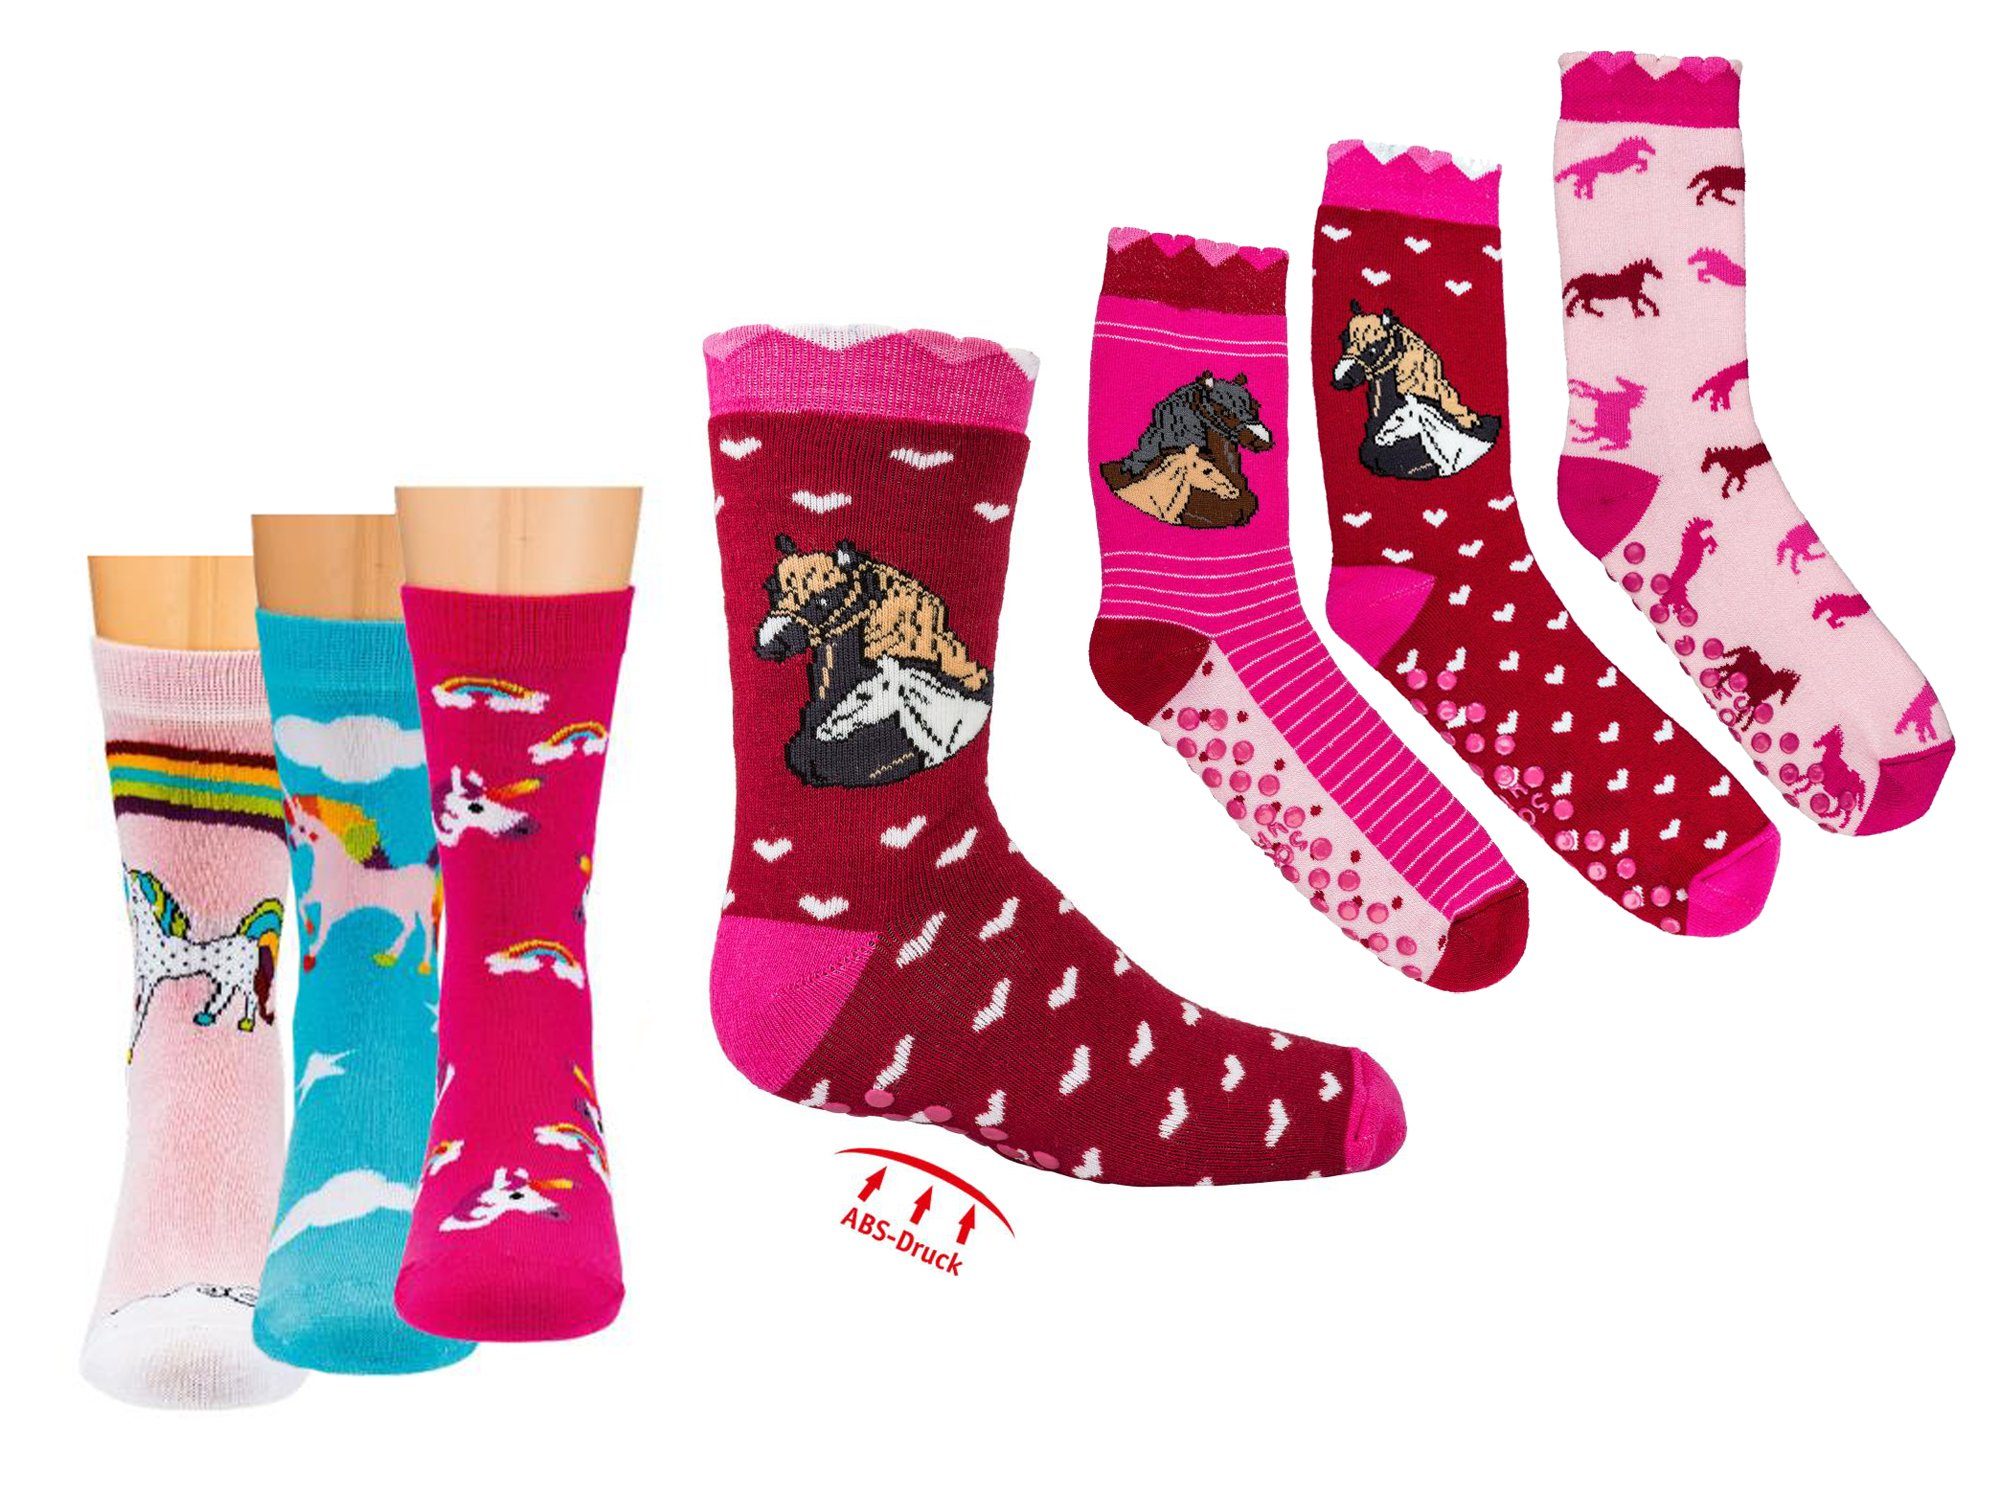 Fun Paar) (Packung, & ABS-Druck Kindersocken 6-Paar, 6 Jungen Kinder ABS-Socken Socken, mit Mädchen Socks Baumwolle, 4 3134